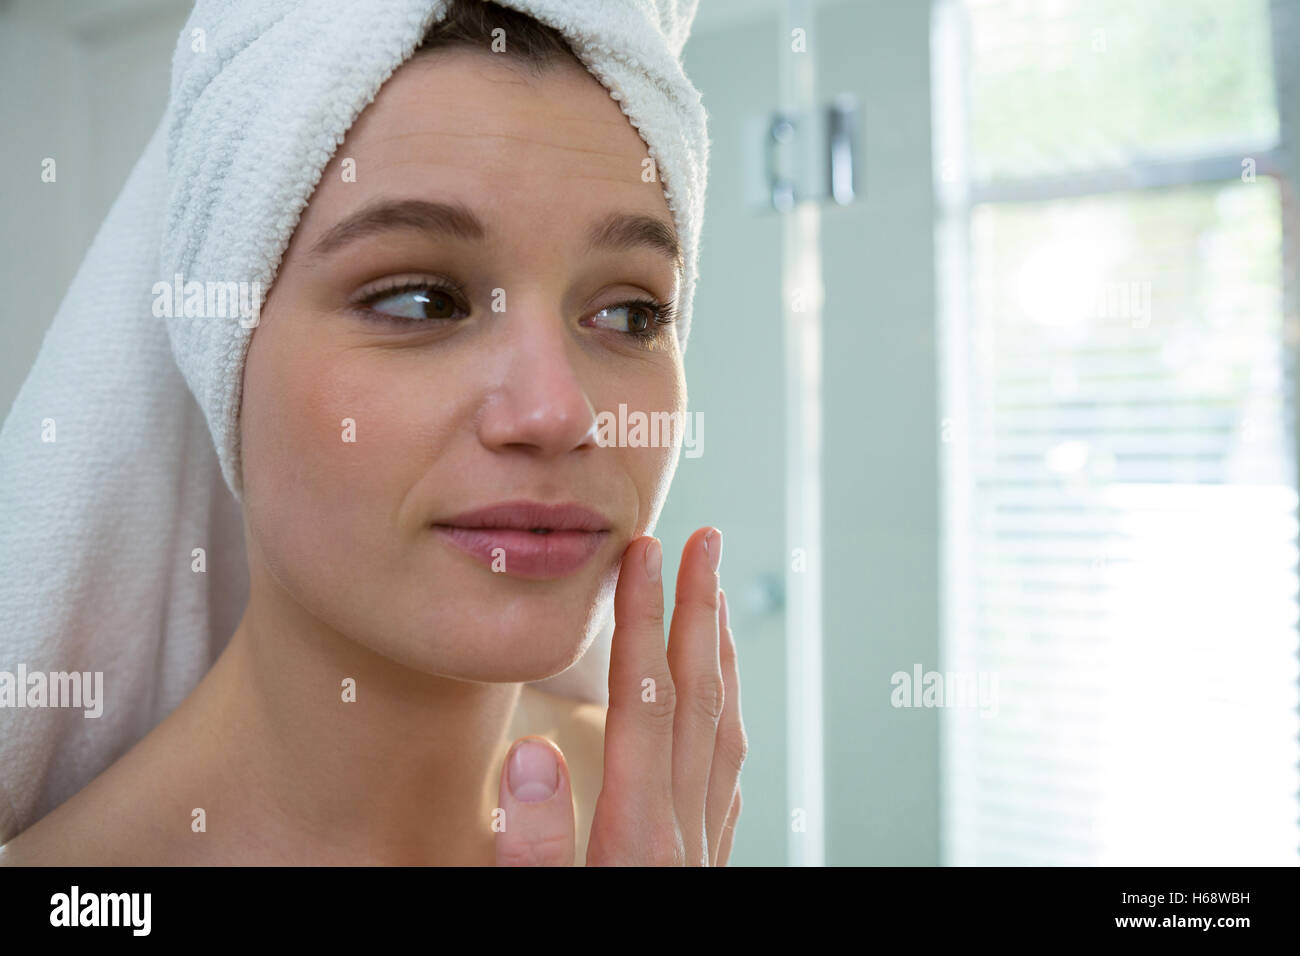 Woman applying moisturizer cream on her face in bathroom Stock Photo